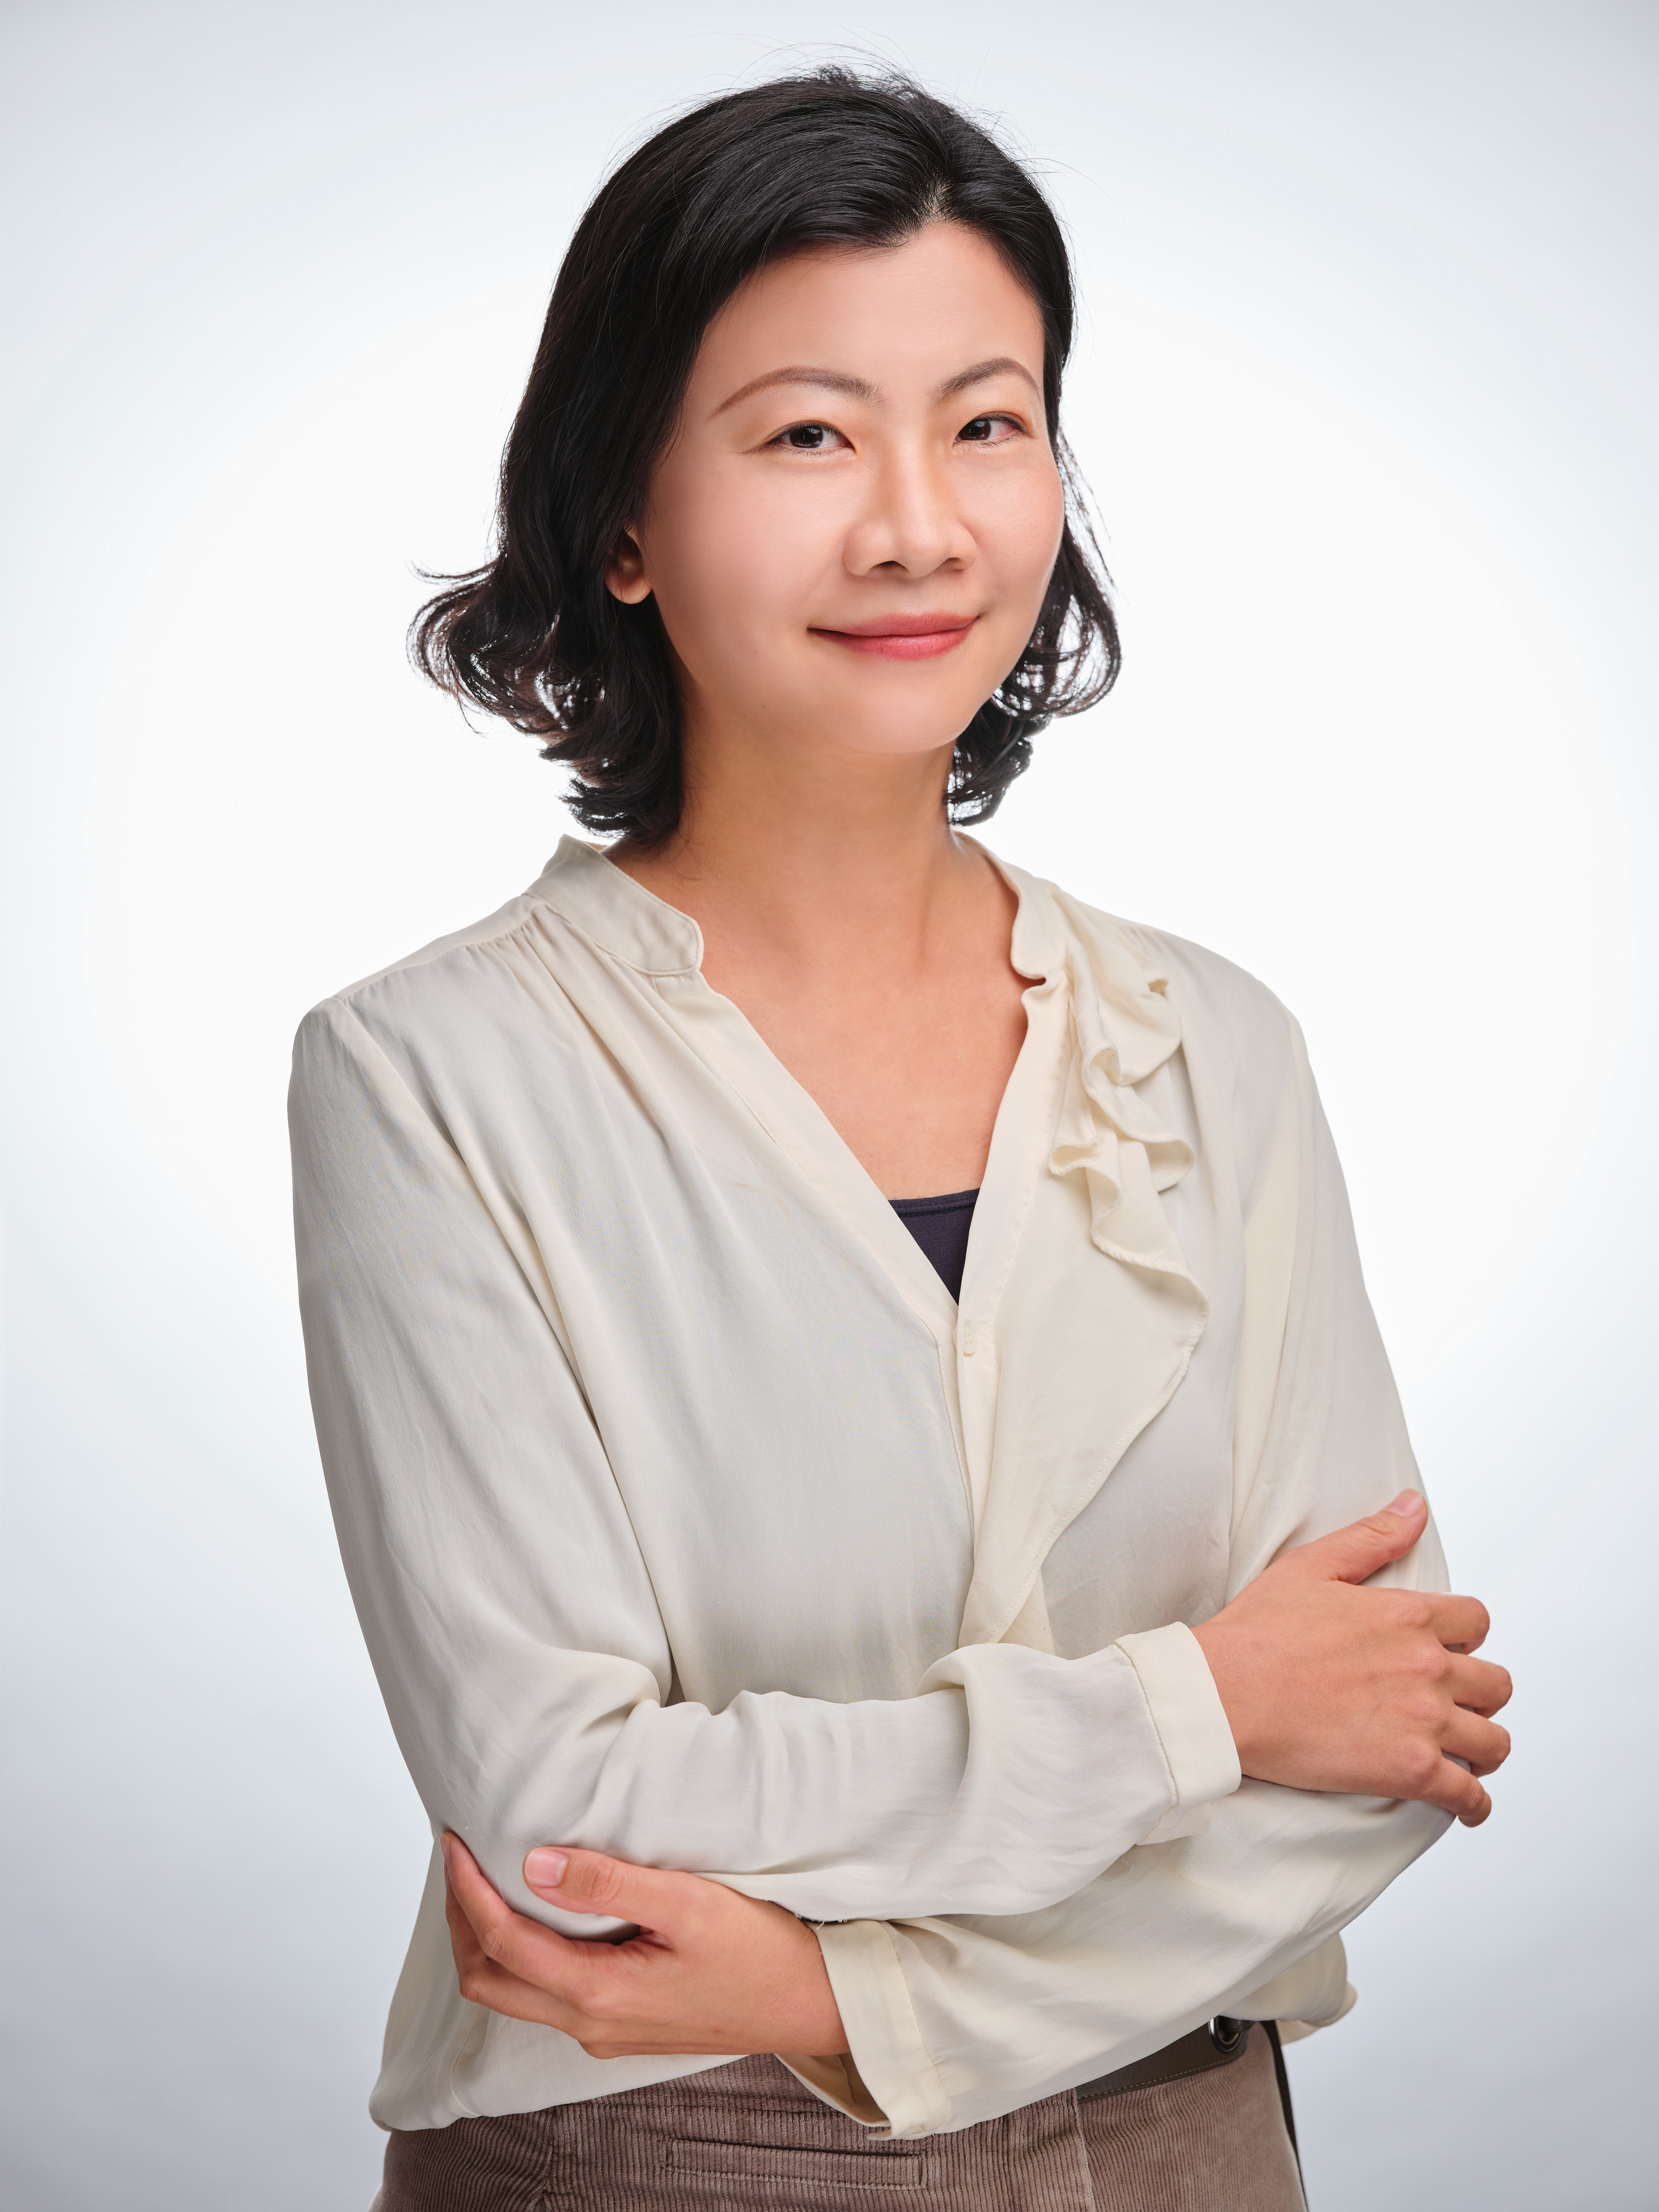 Ms. Jane Xu